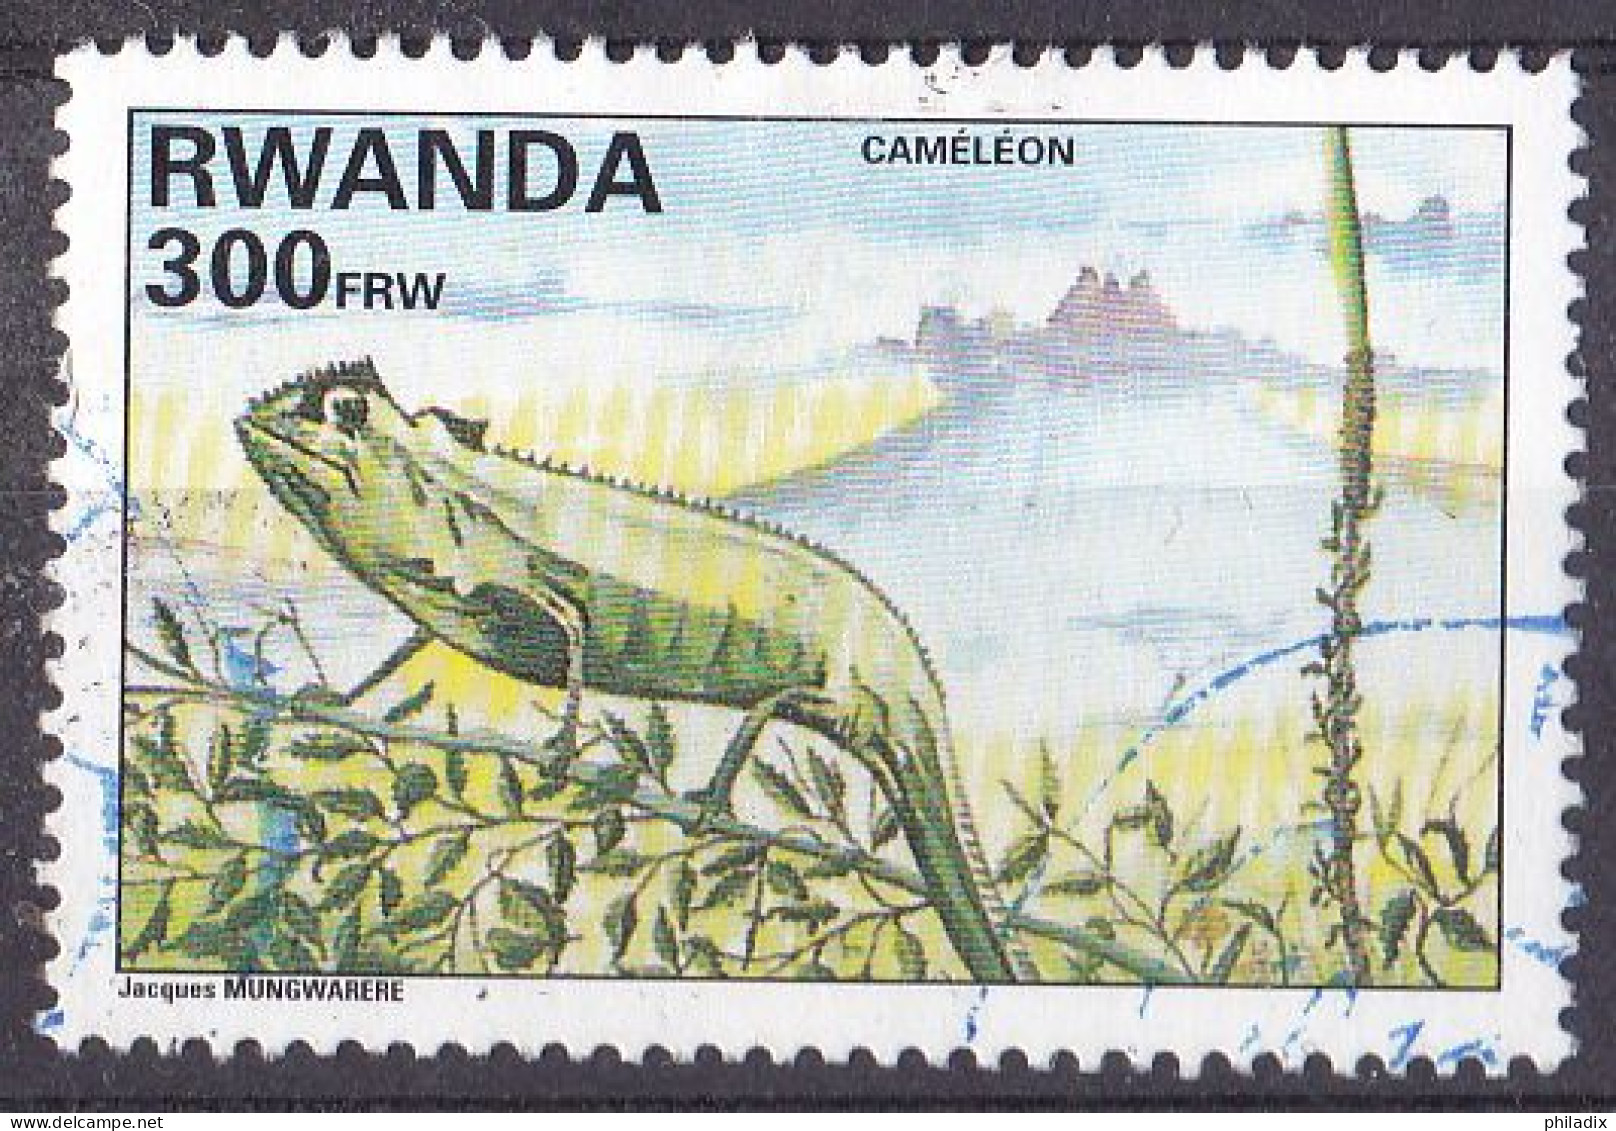 Ruanda Marke Von 1995 O/used (A5-17) - Used Stamps